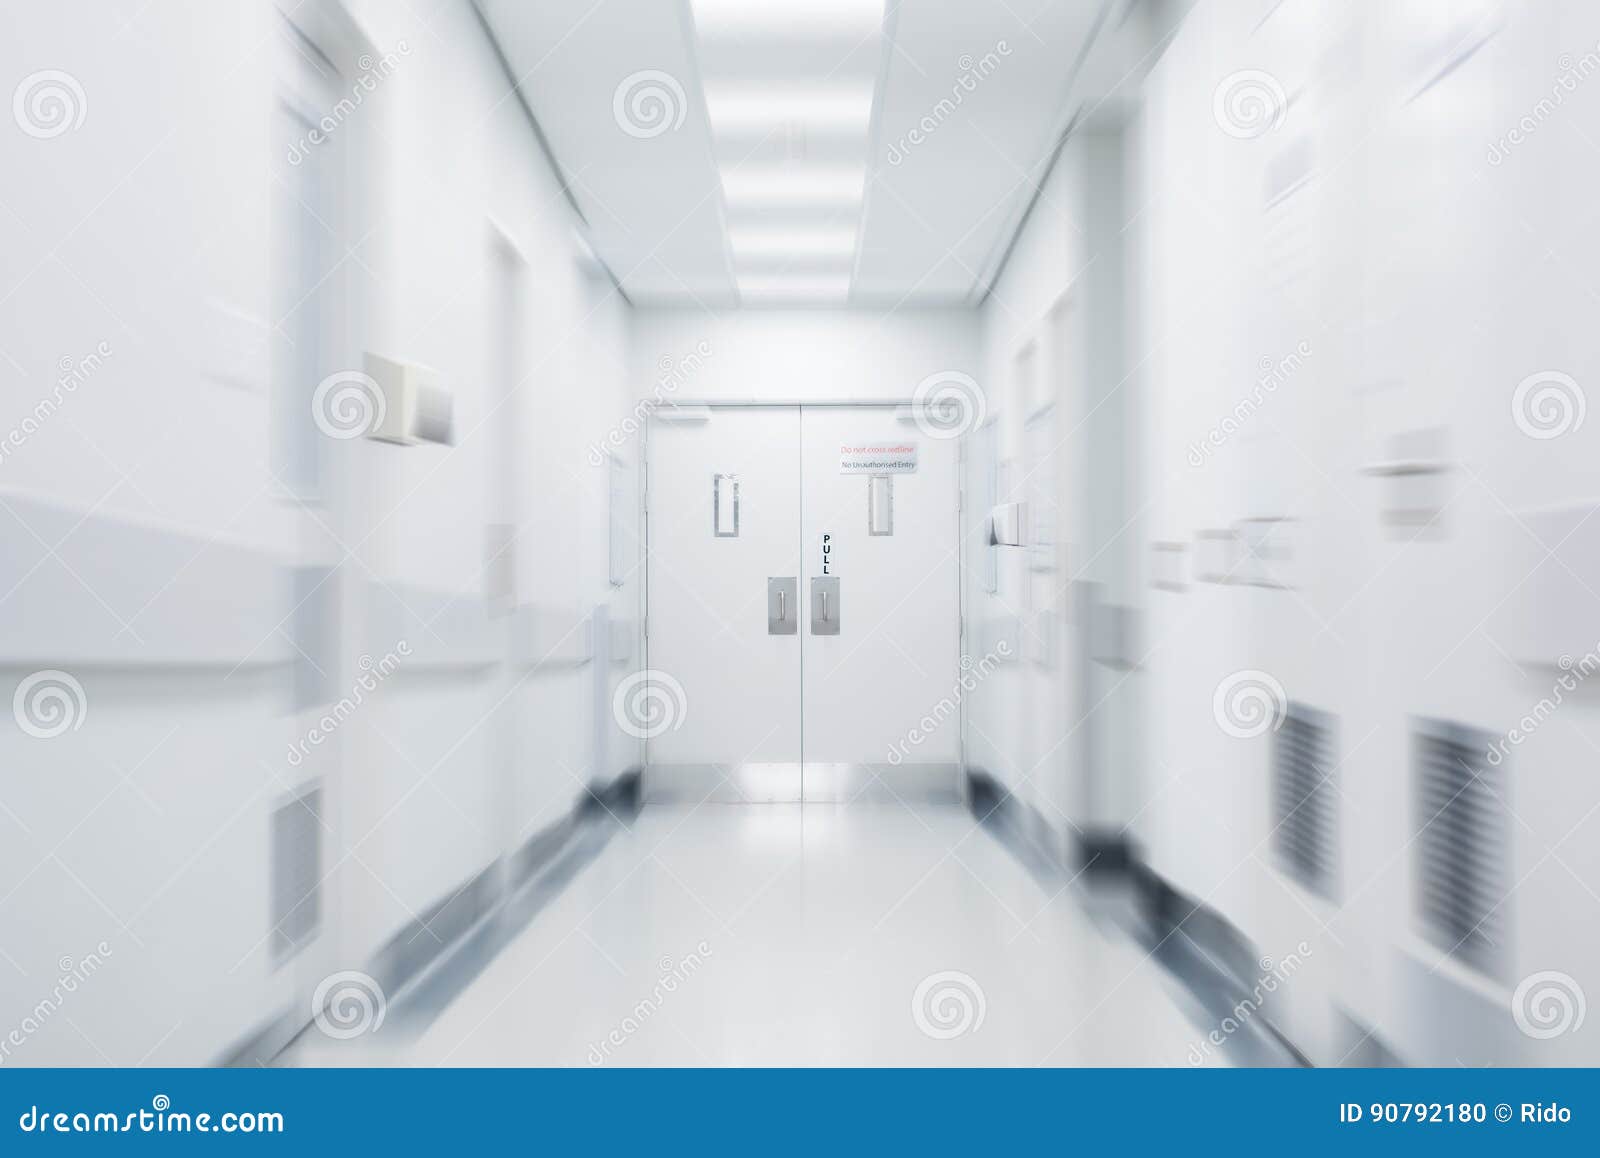 Empty Hospital Corridor Stock Photo Image Of Modern 90792180